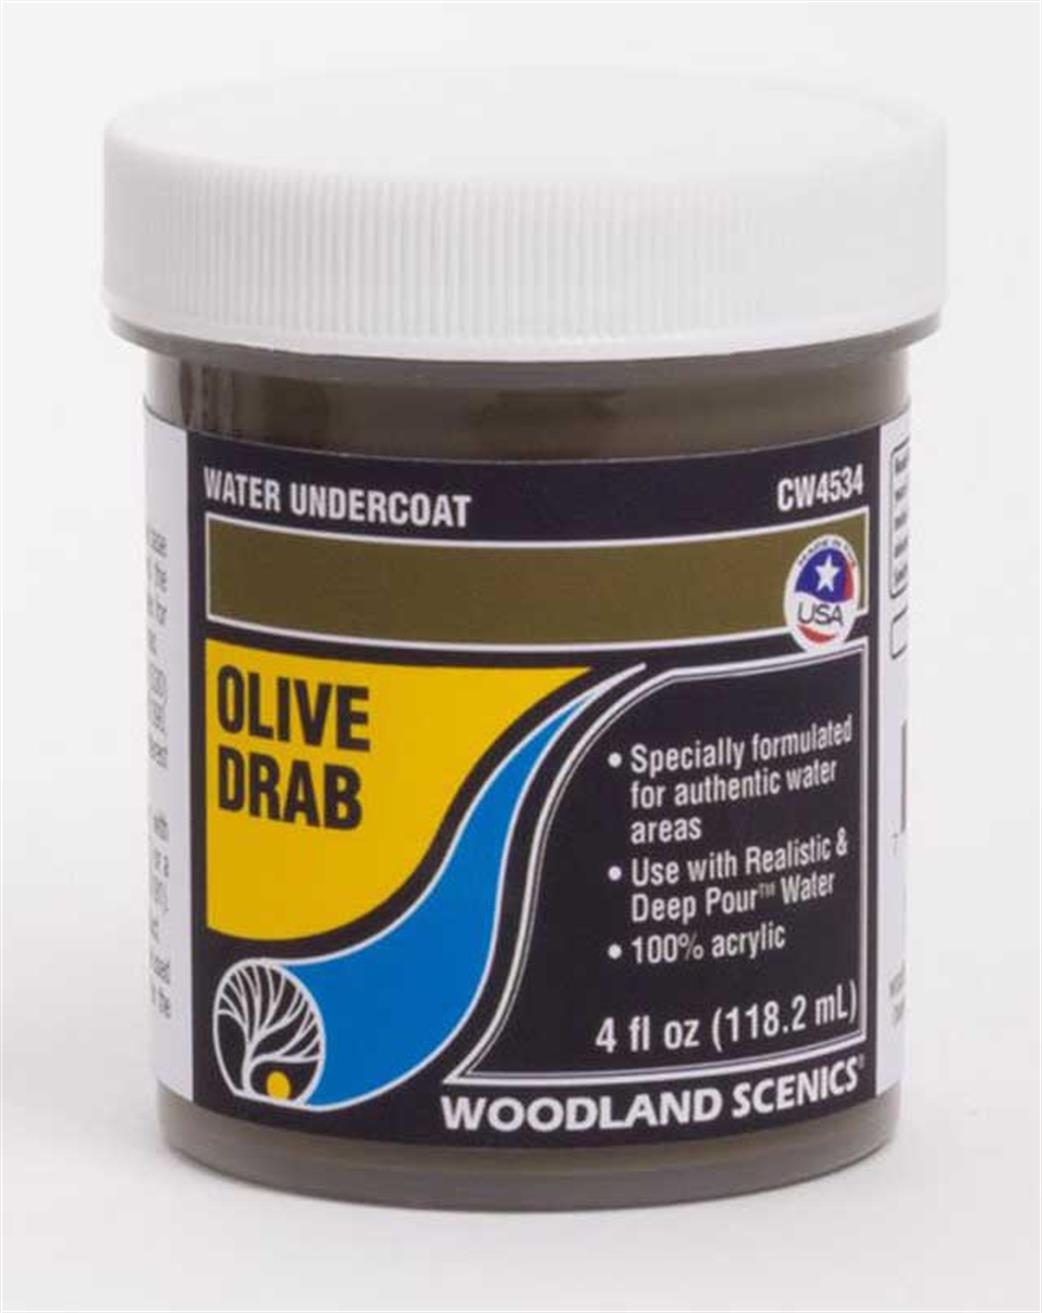 Woodland Scenics CW4534 Olive Drab Water Undercoat